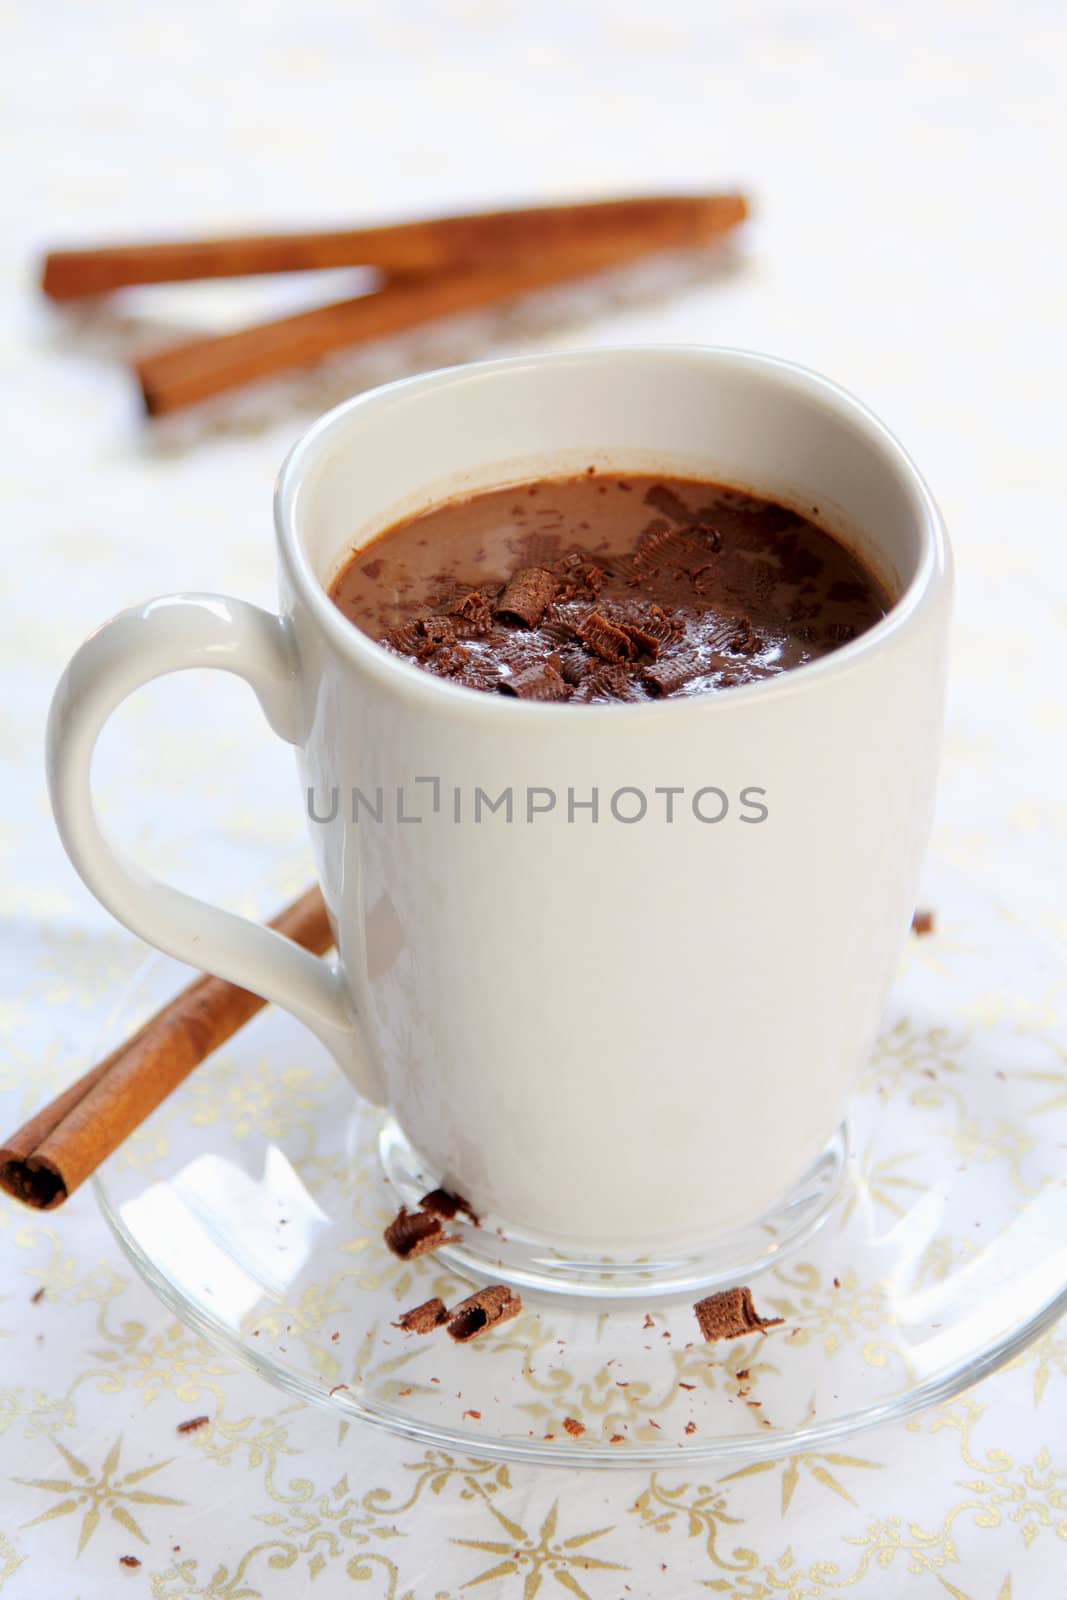 Hot chocolate with cinnamon stick